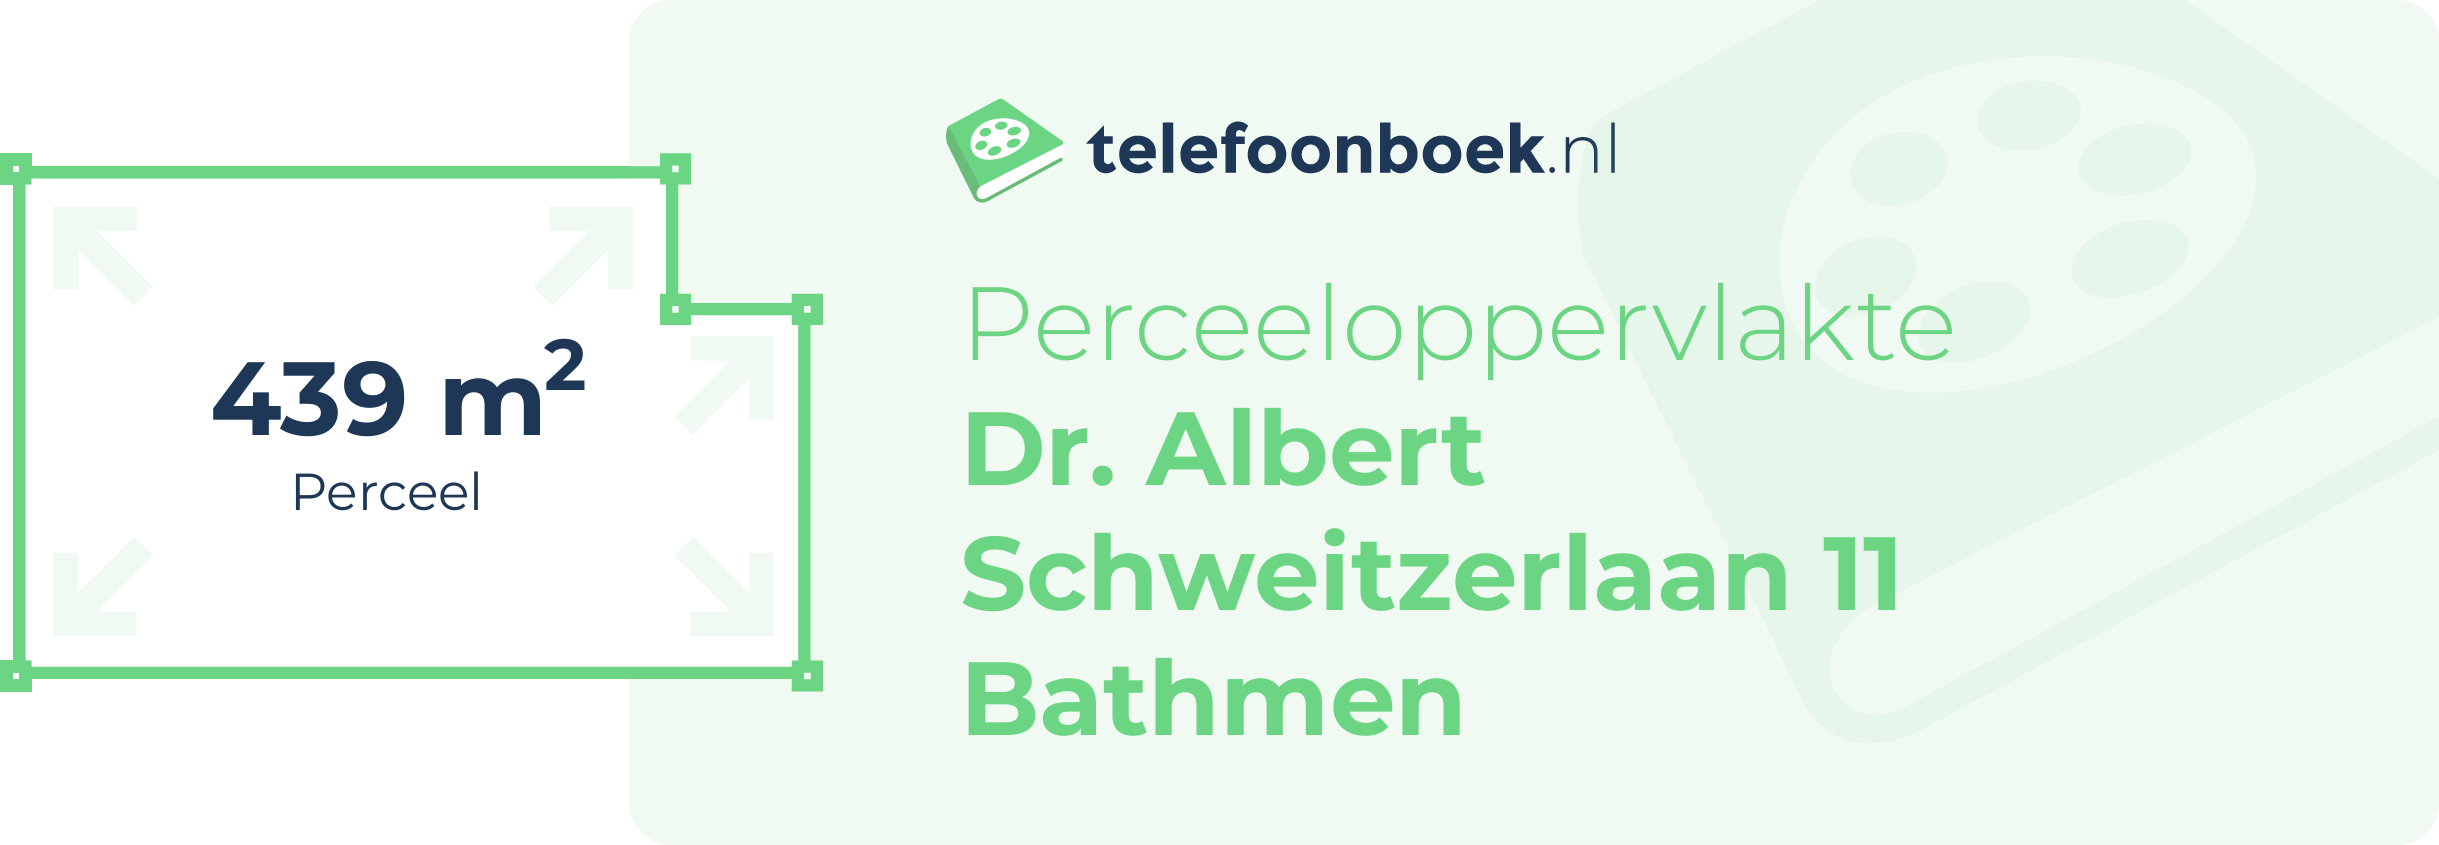 Perceeloppervlakte Dr. Albert Schweitzerlaan 11 Bathmen